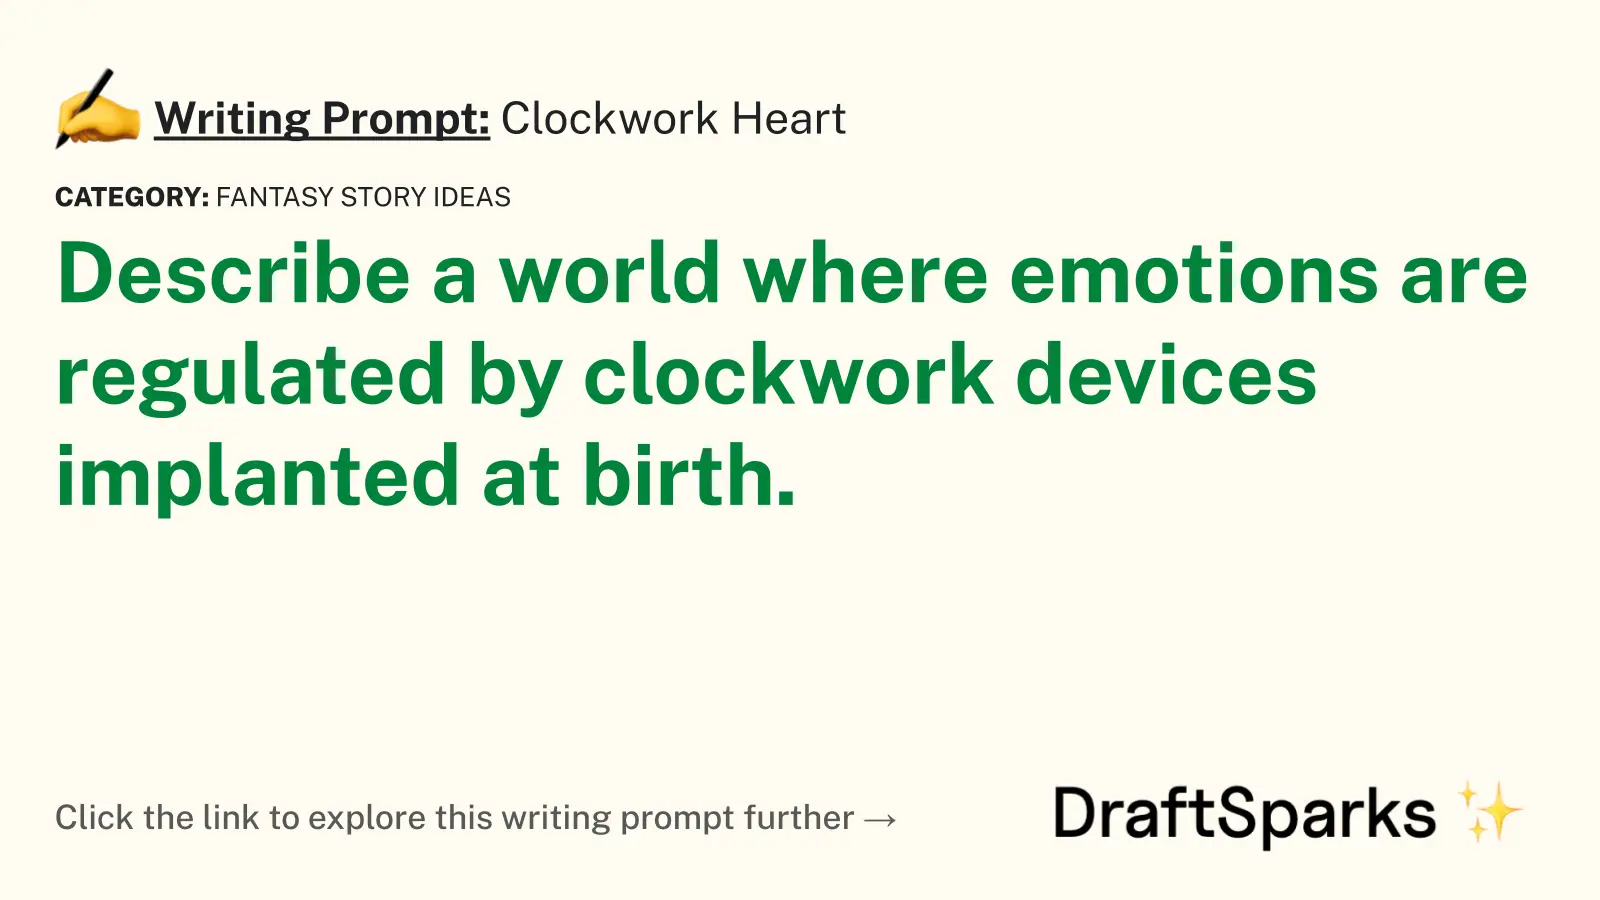 Clockwork Heart